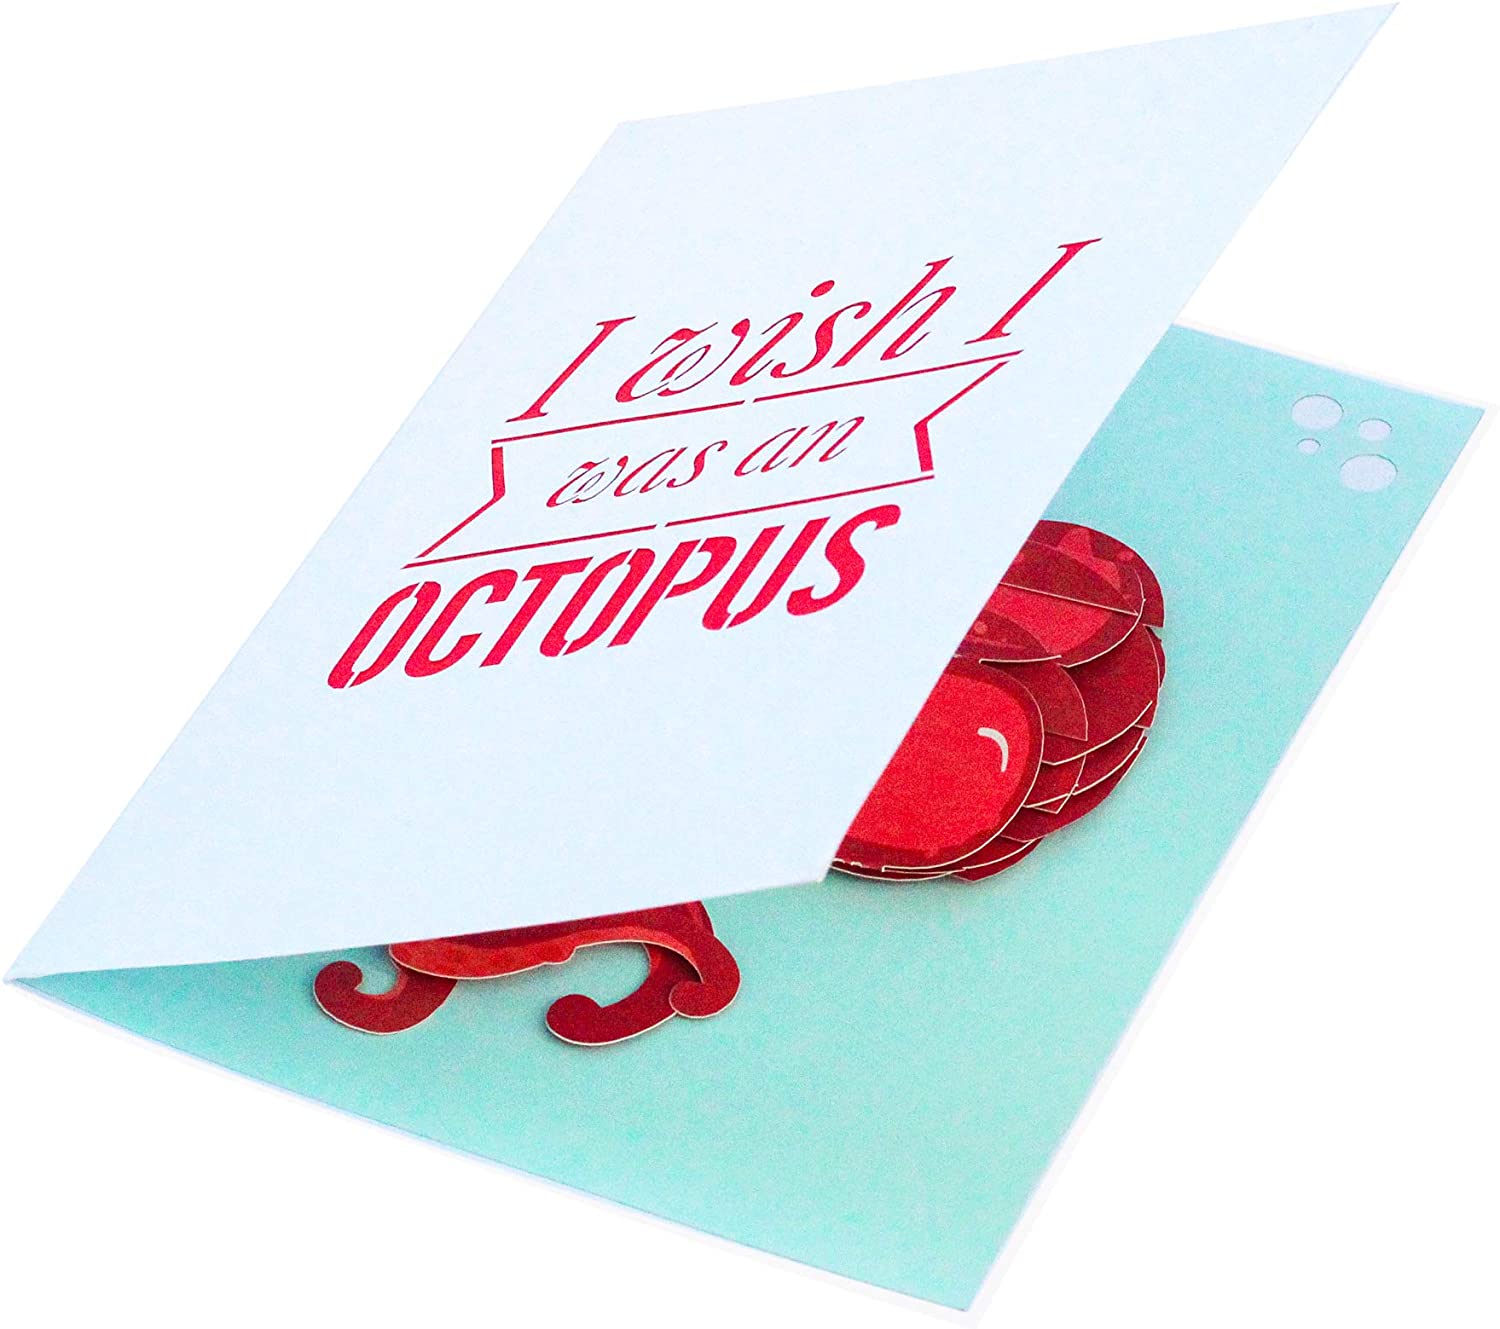 Naughty Octopus Pop Up Card